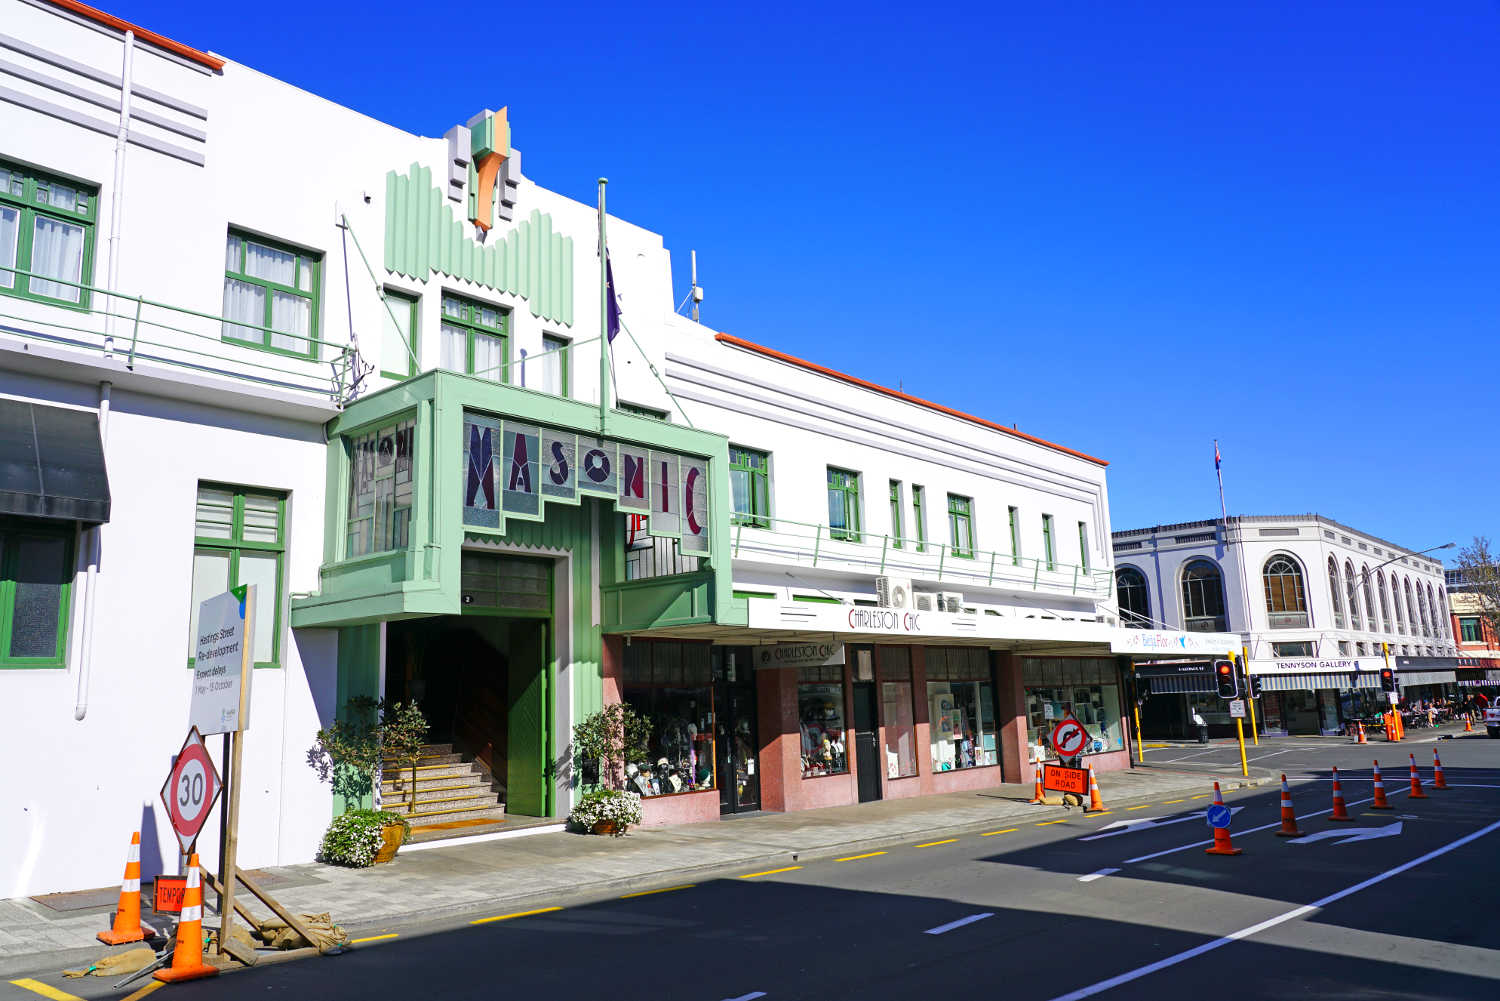 Art Deco Masonic Hotel building in Napier, New Zealand